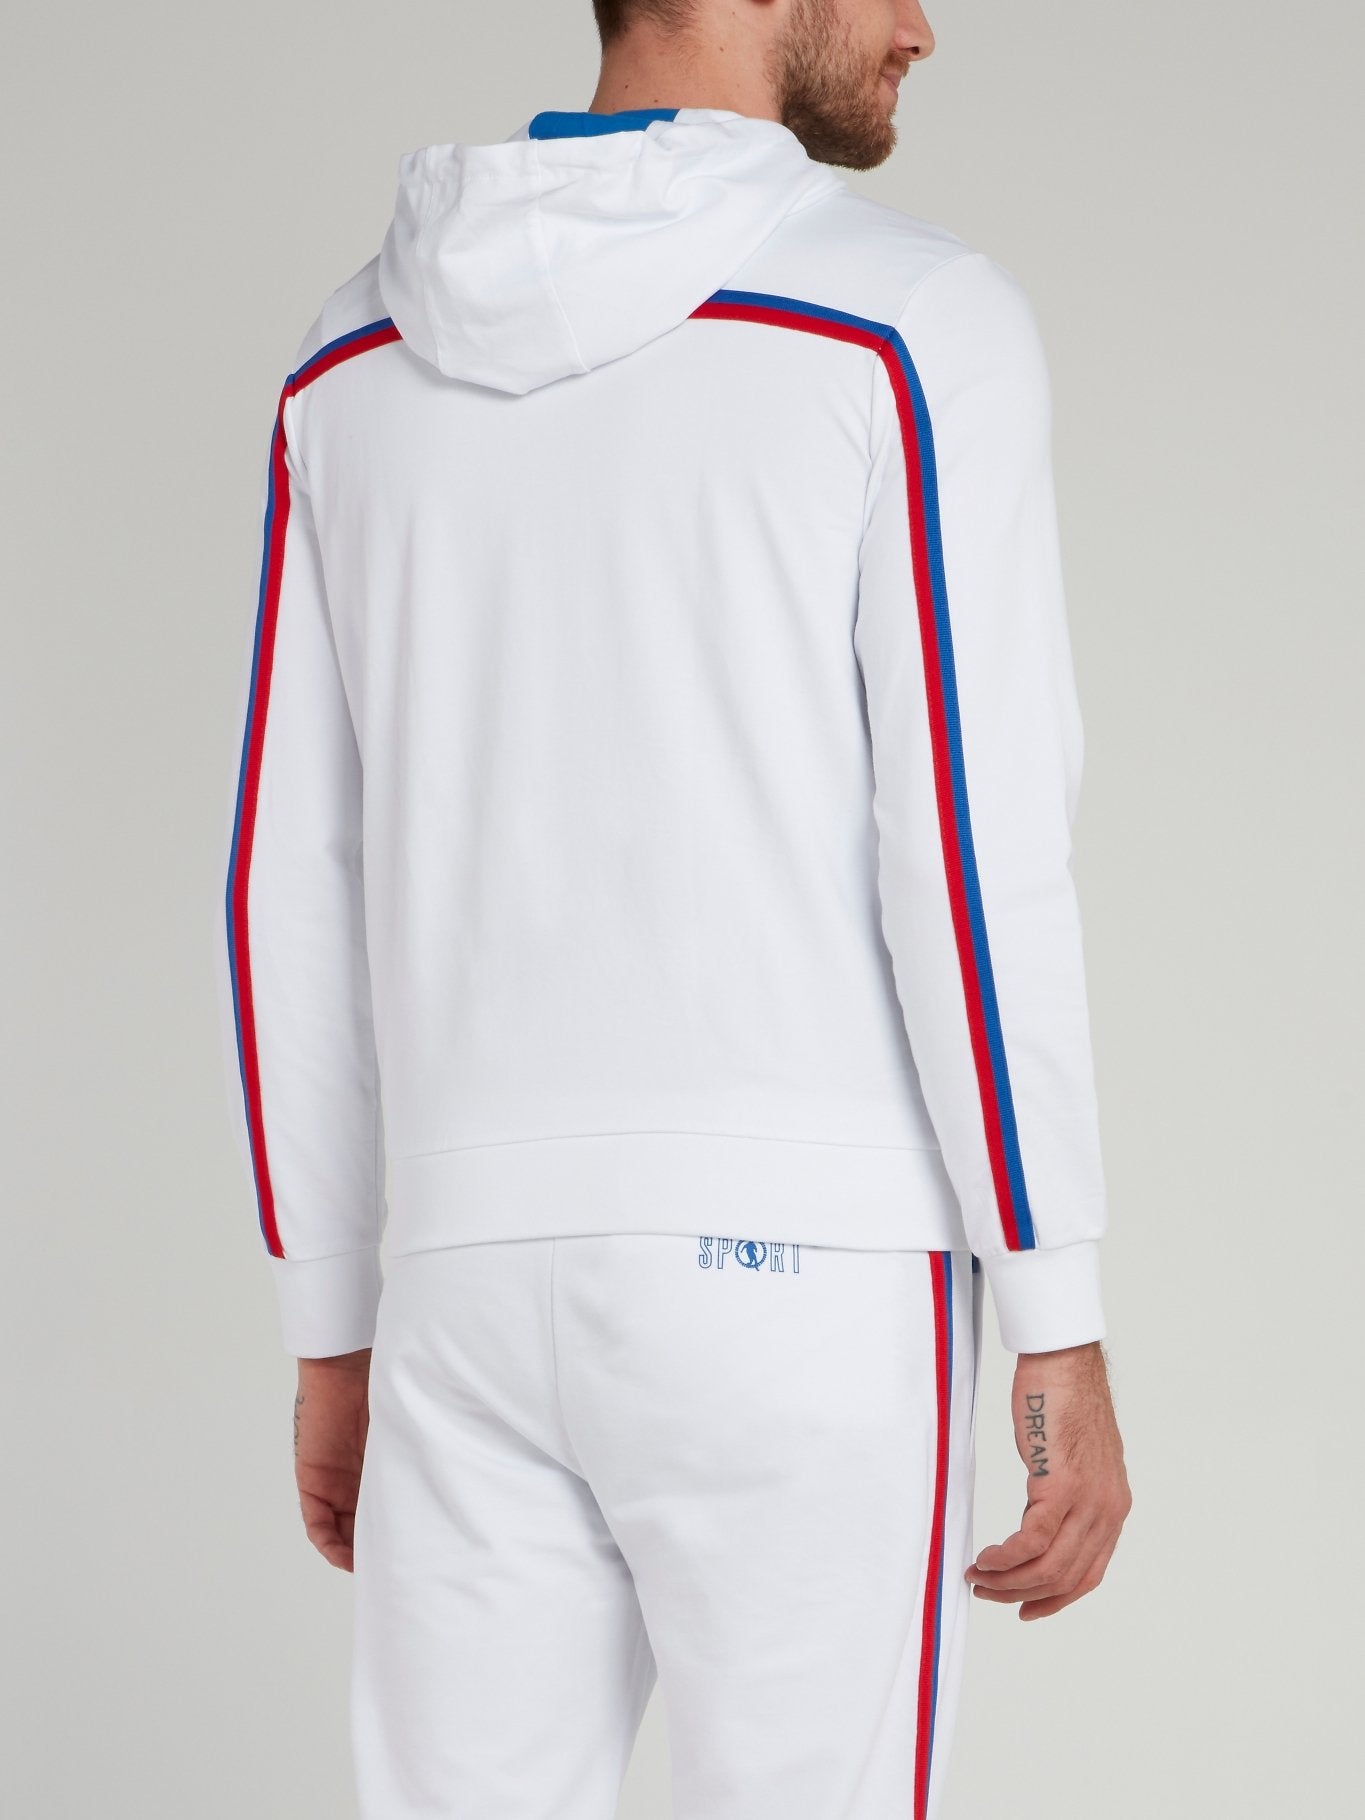 White Sport Icon Hooded Jacket